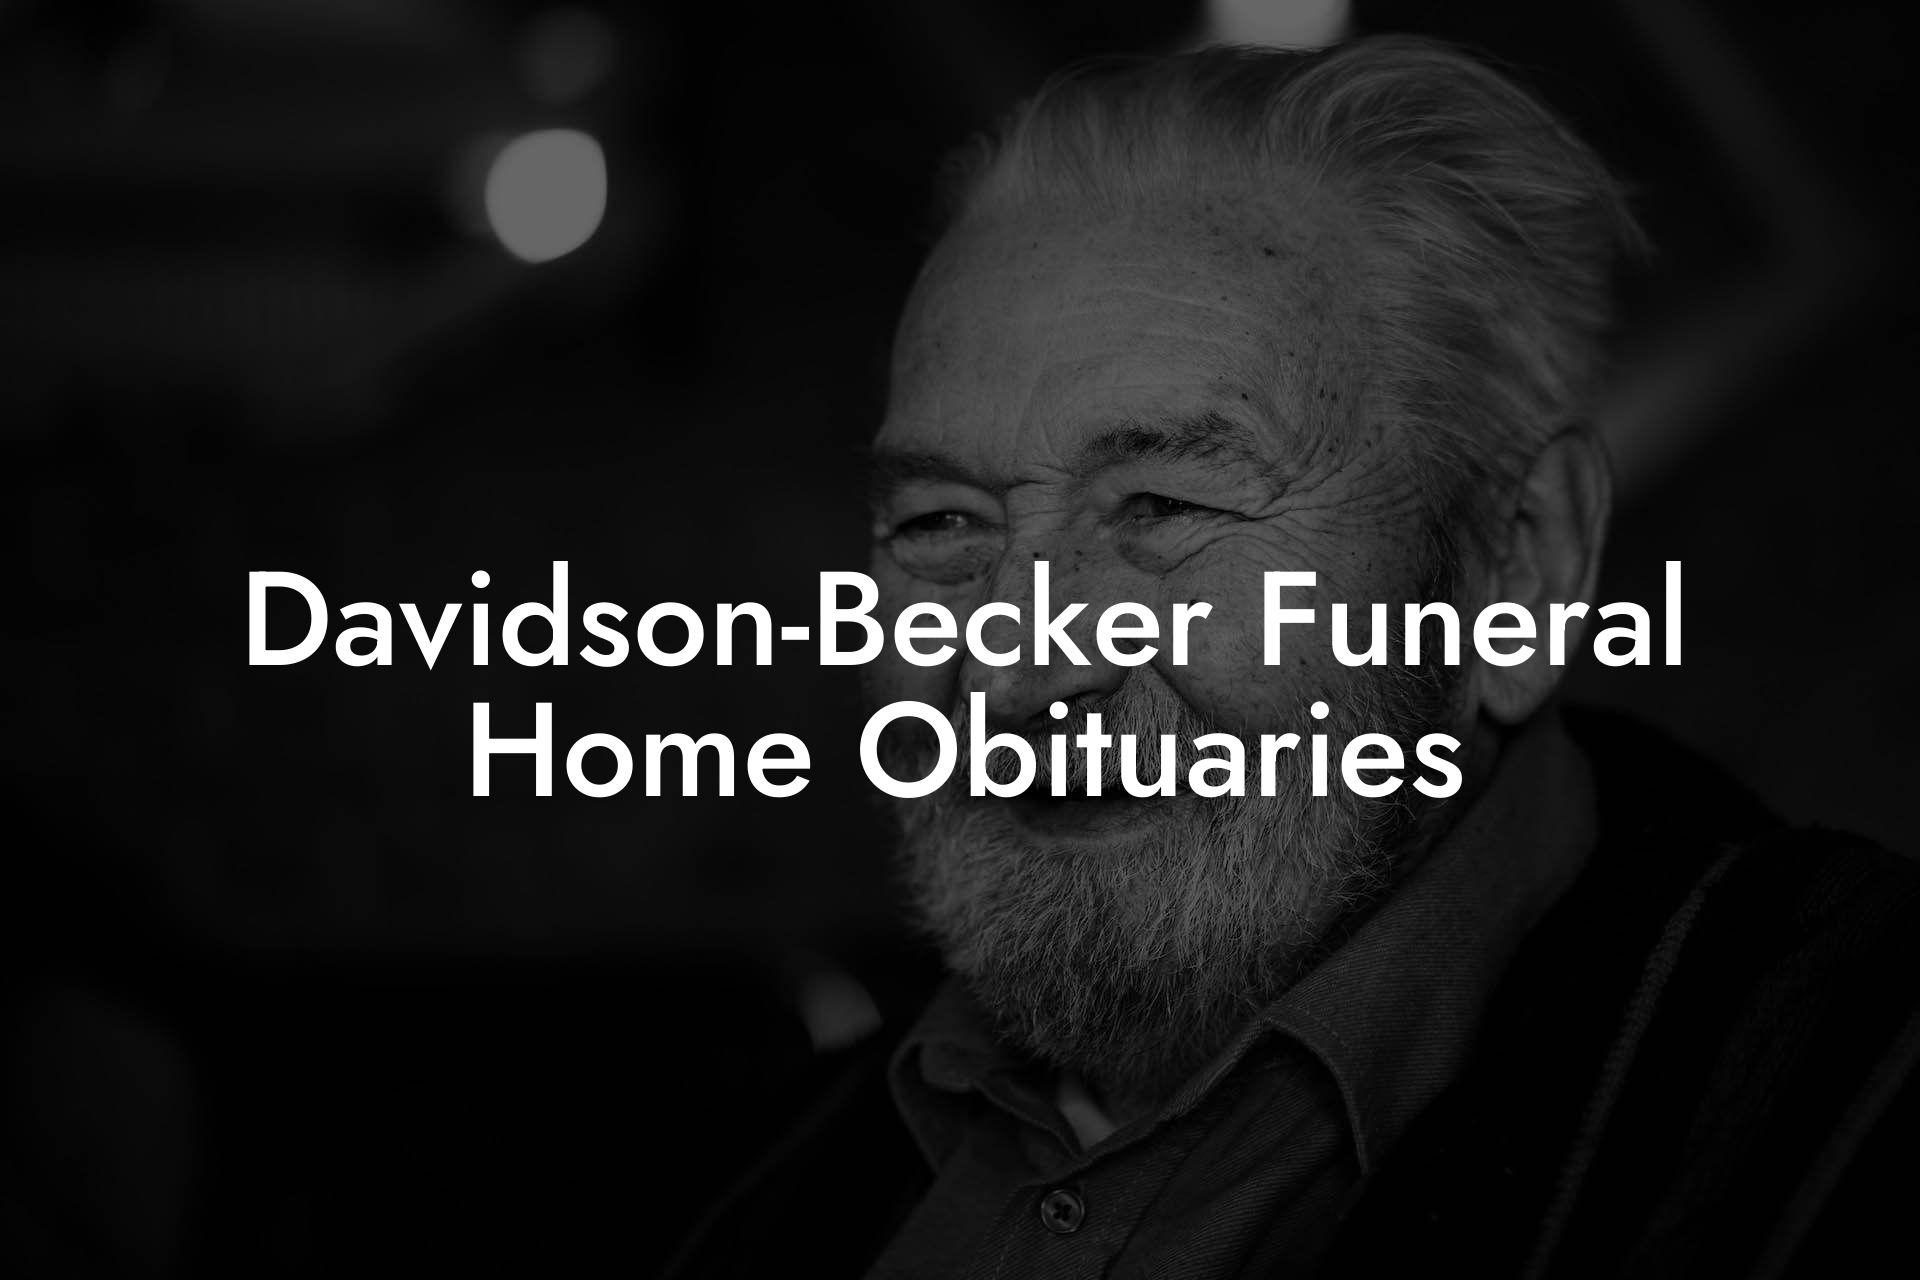 Davidson-Becker Funeral Home Obituaries